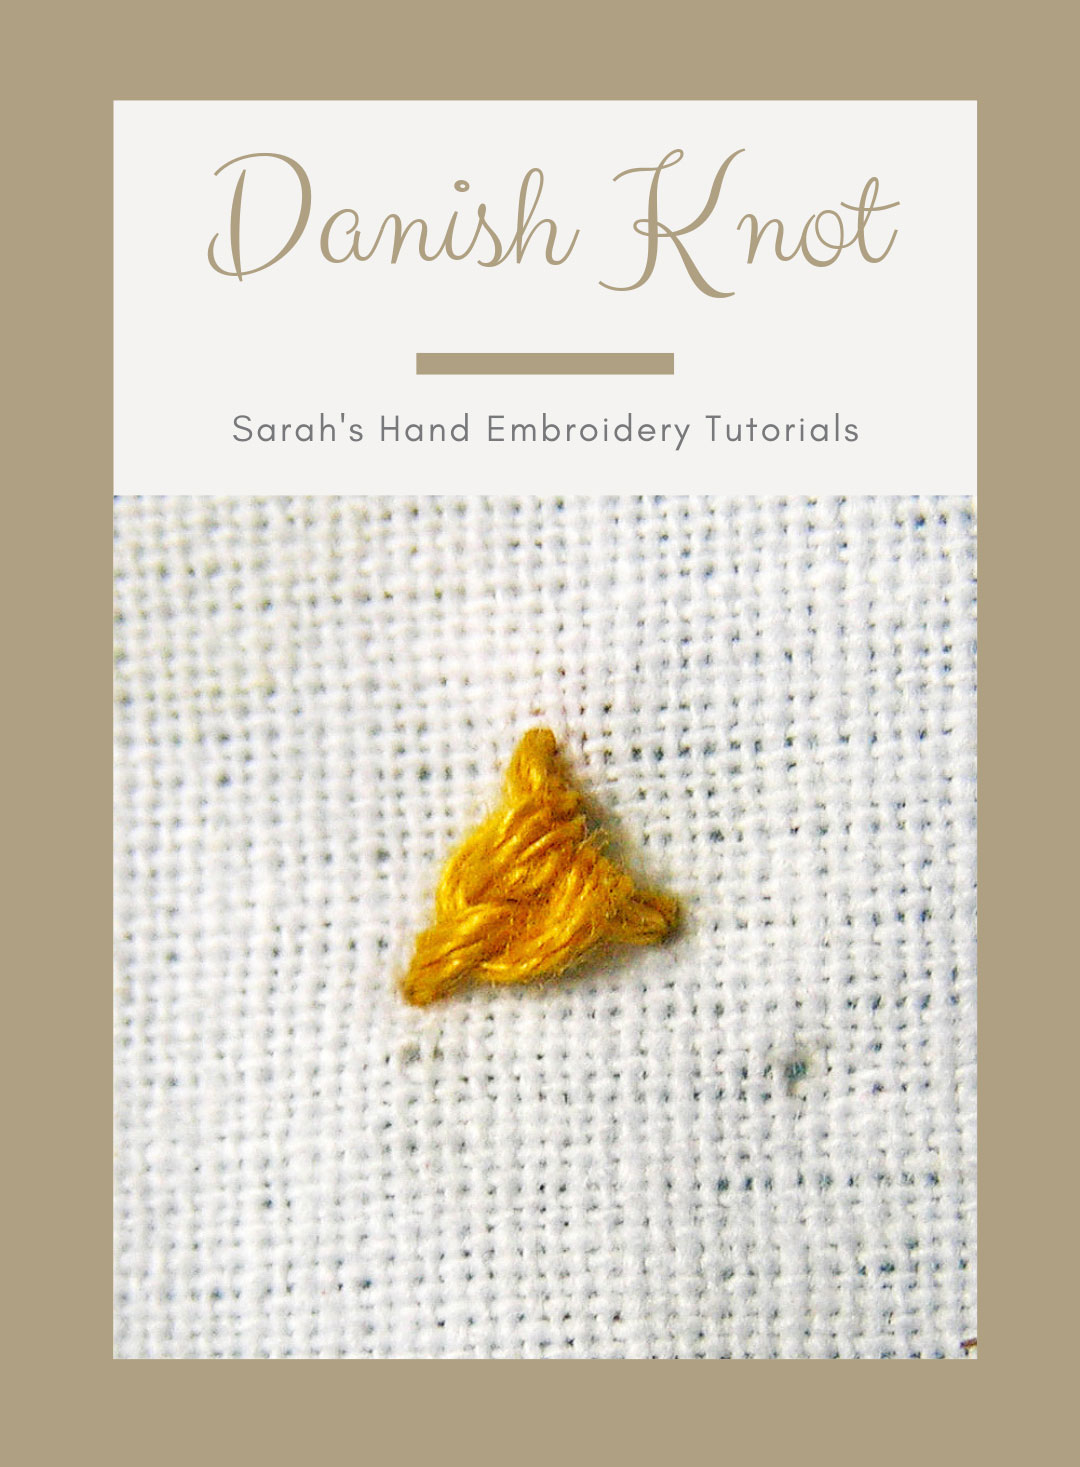 Danish Knot - Sarah's Hand Embroidery Tutorials